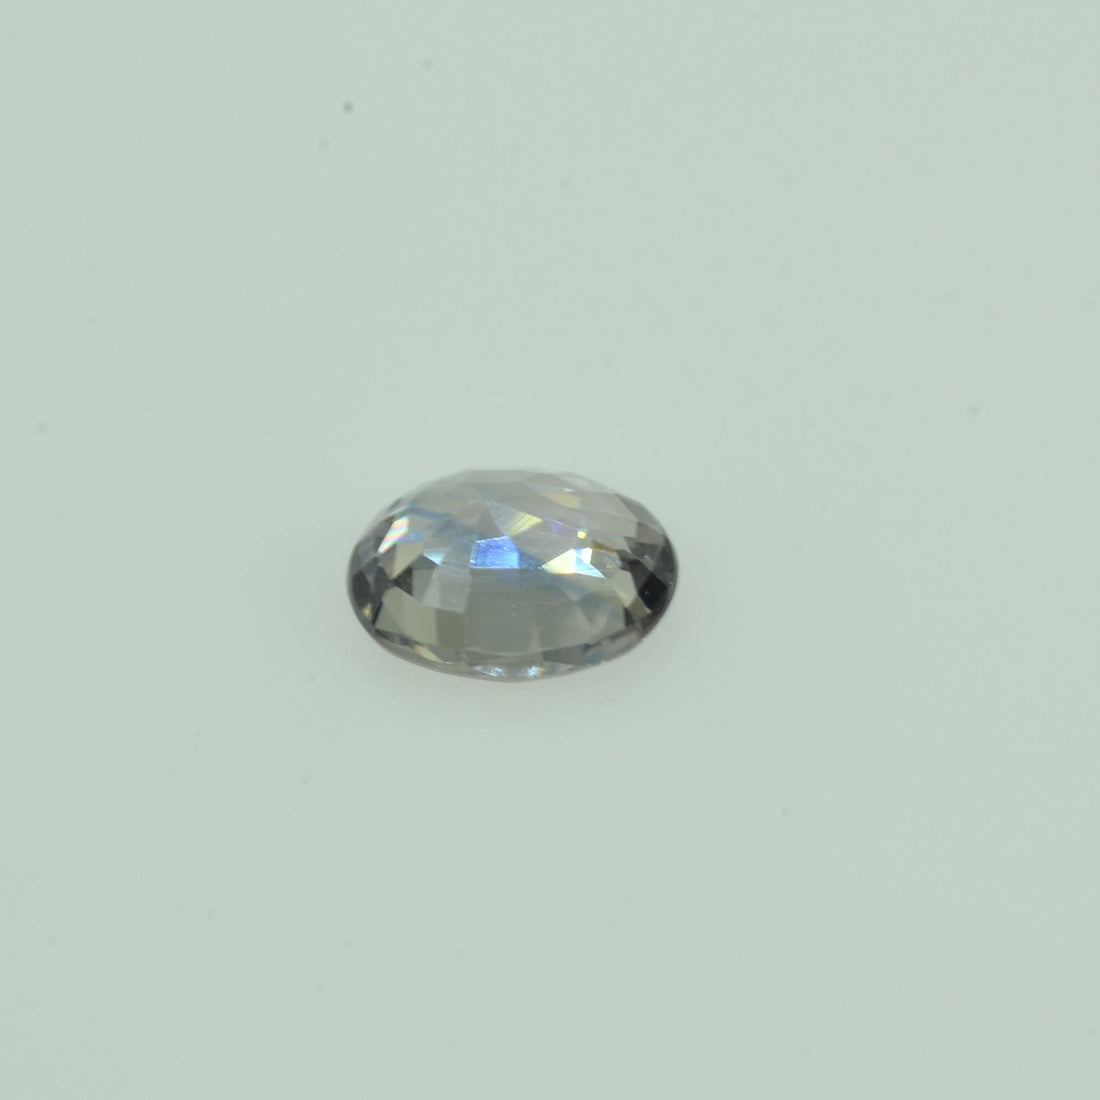 0.54 cts Natural PurpleAsh Sapphire Loose Gemstone Oval Cut - Thai Gems Export Ltd.